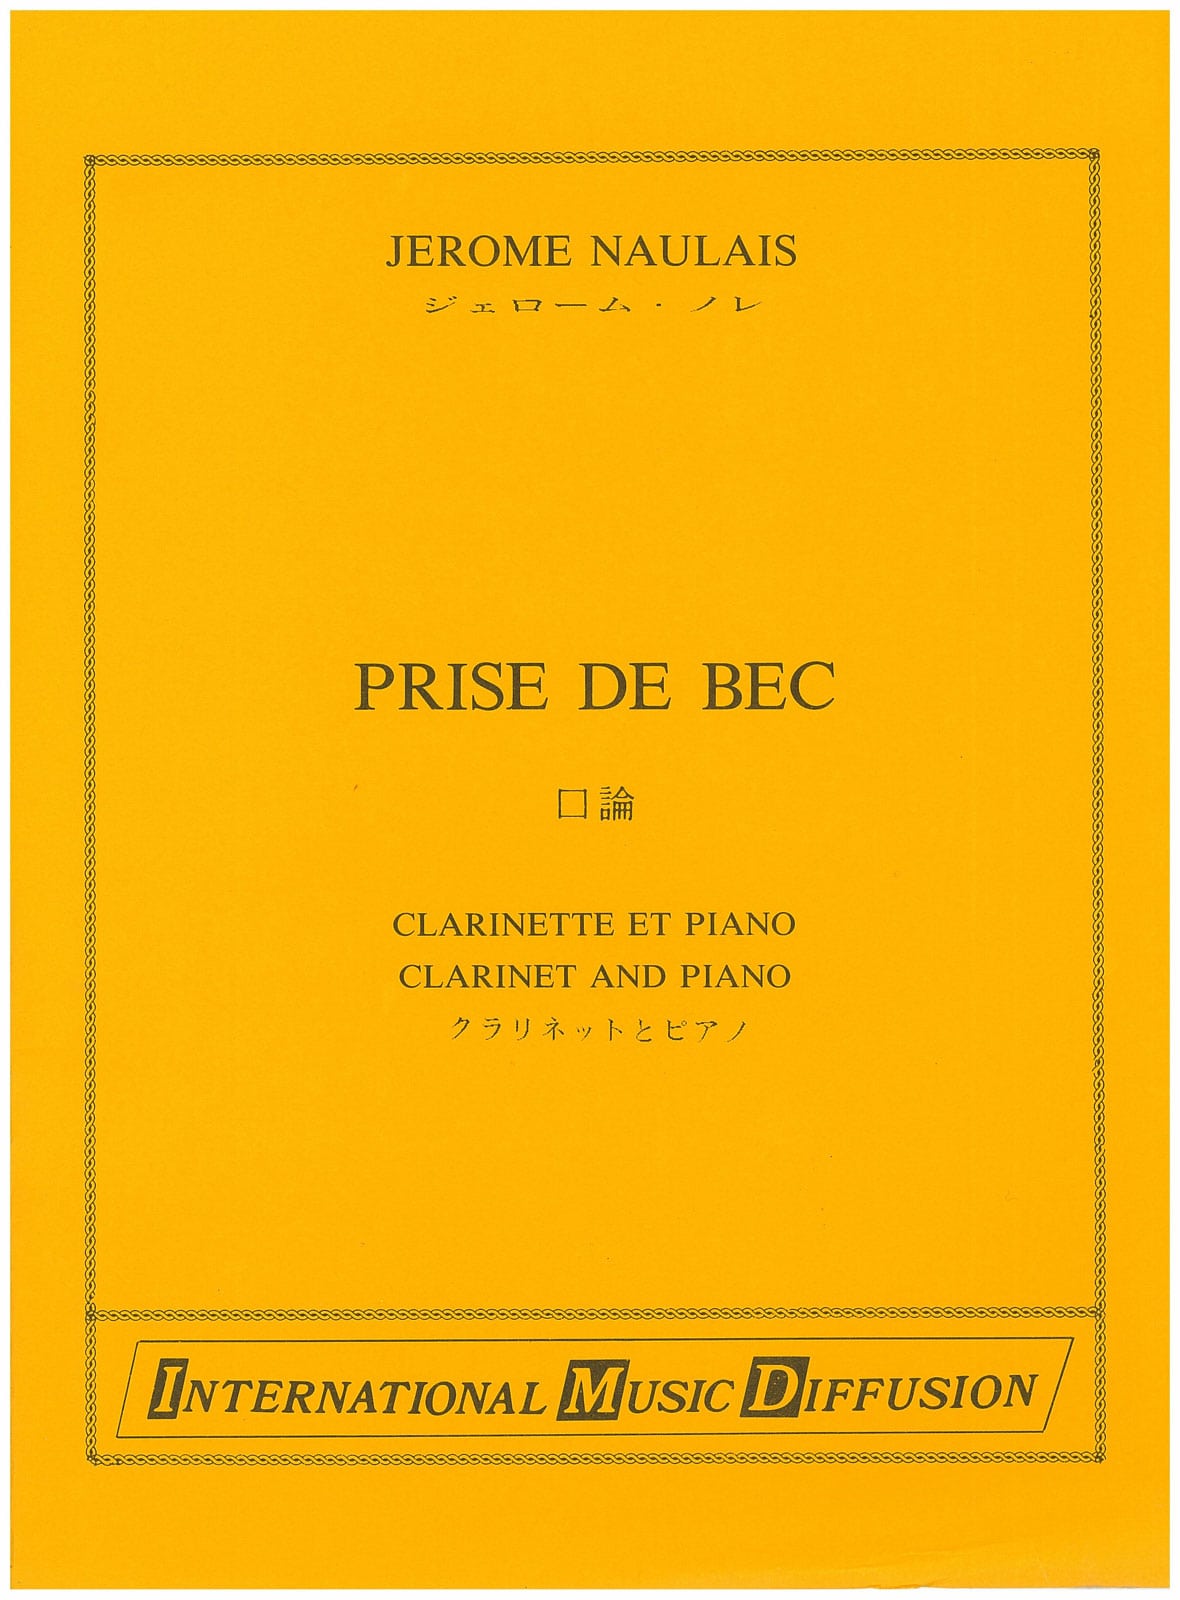 IMD ARPEGES NAULAIS - PRISE DE BEC - CLARINETTE ET PIANO